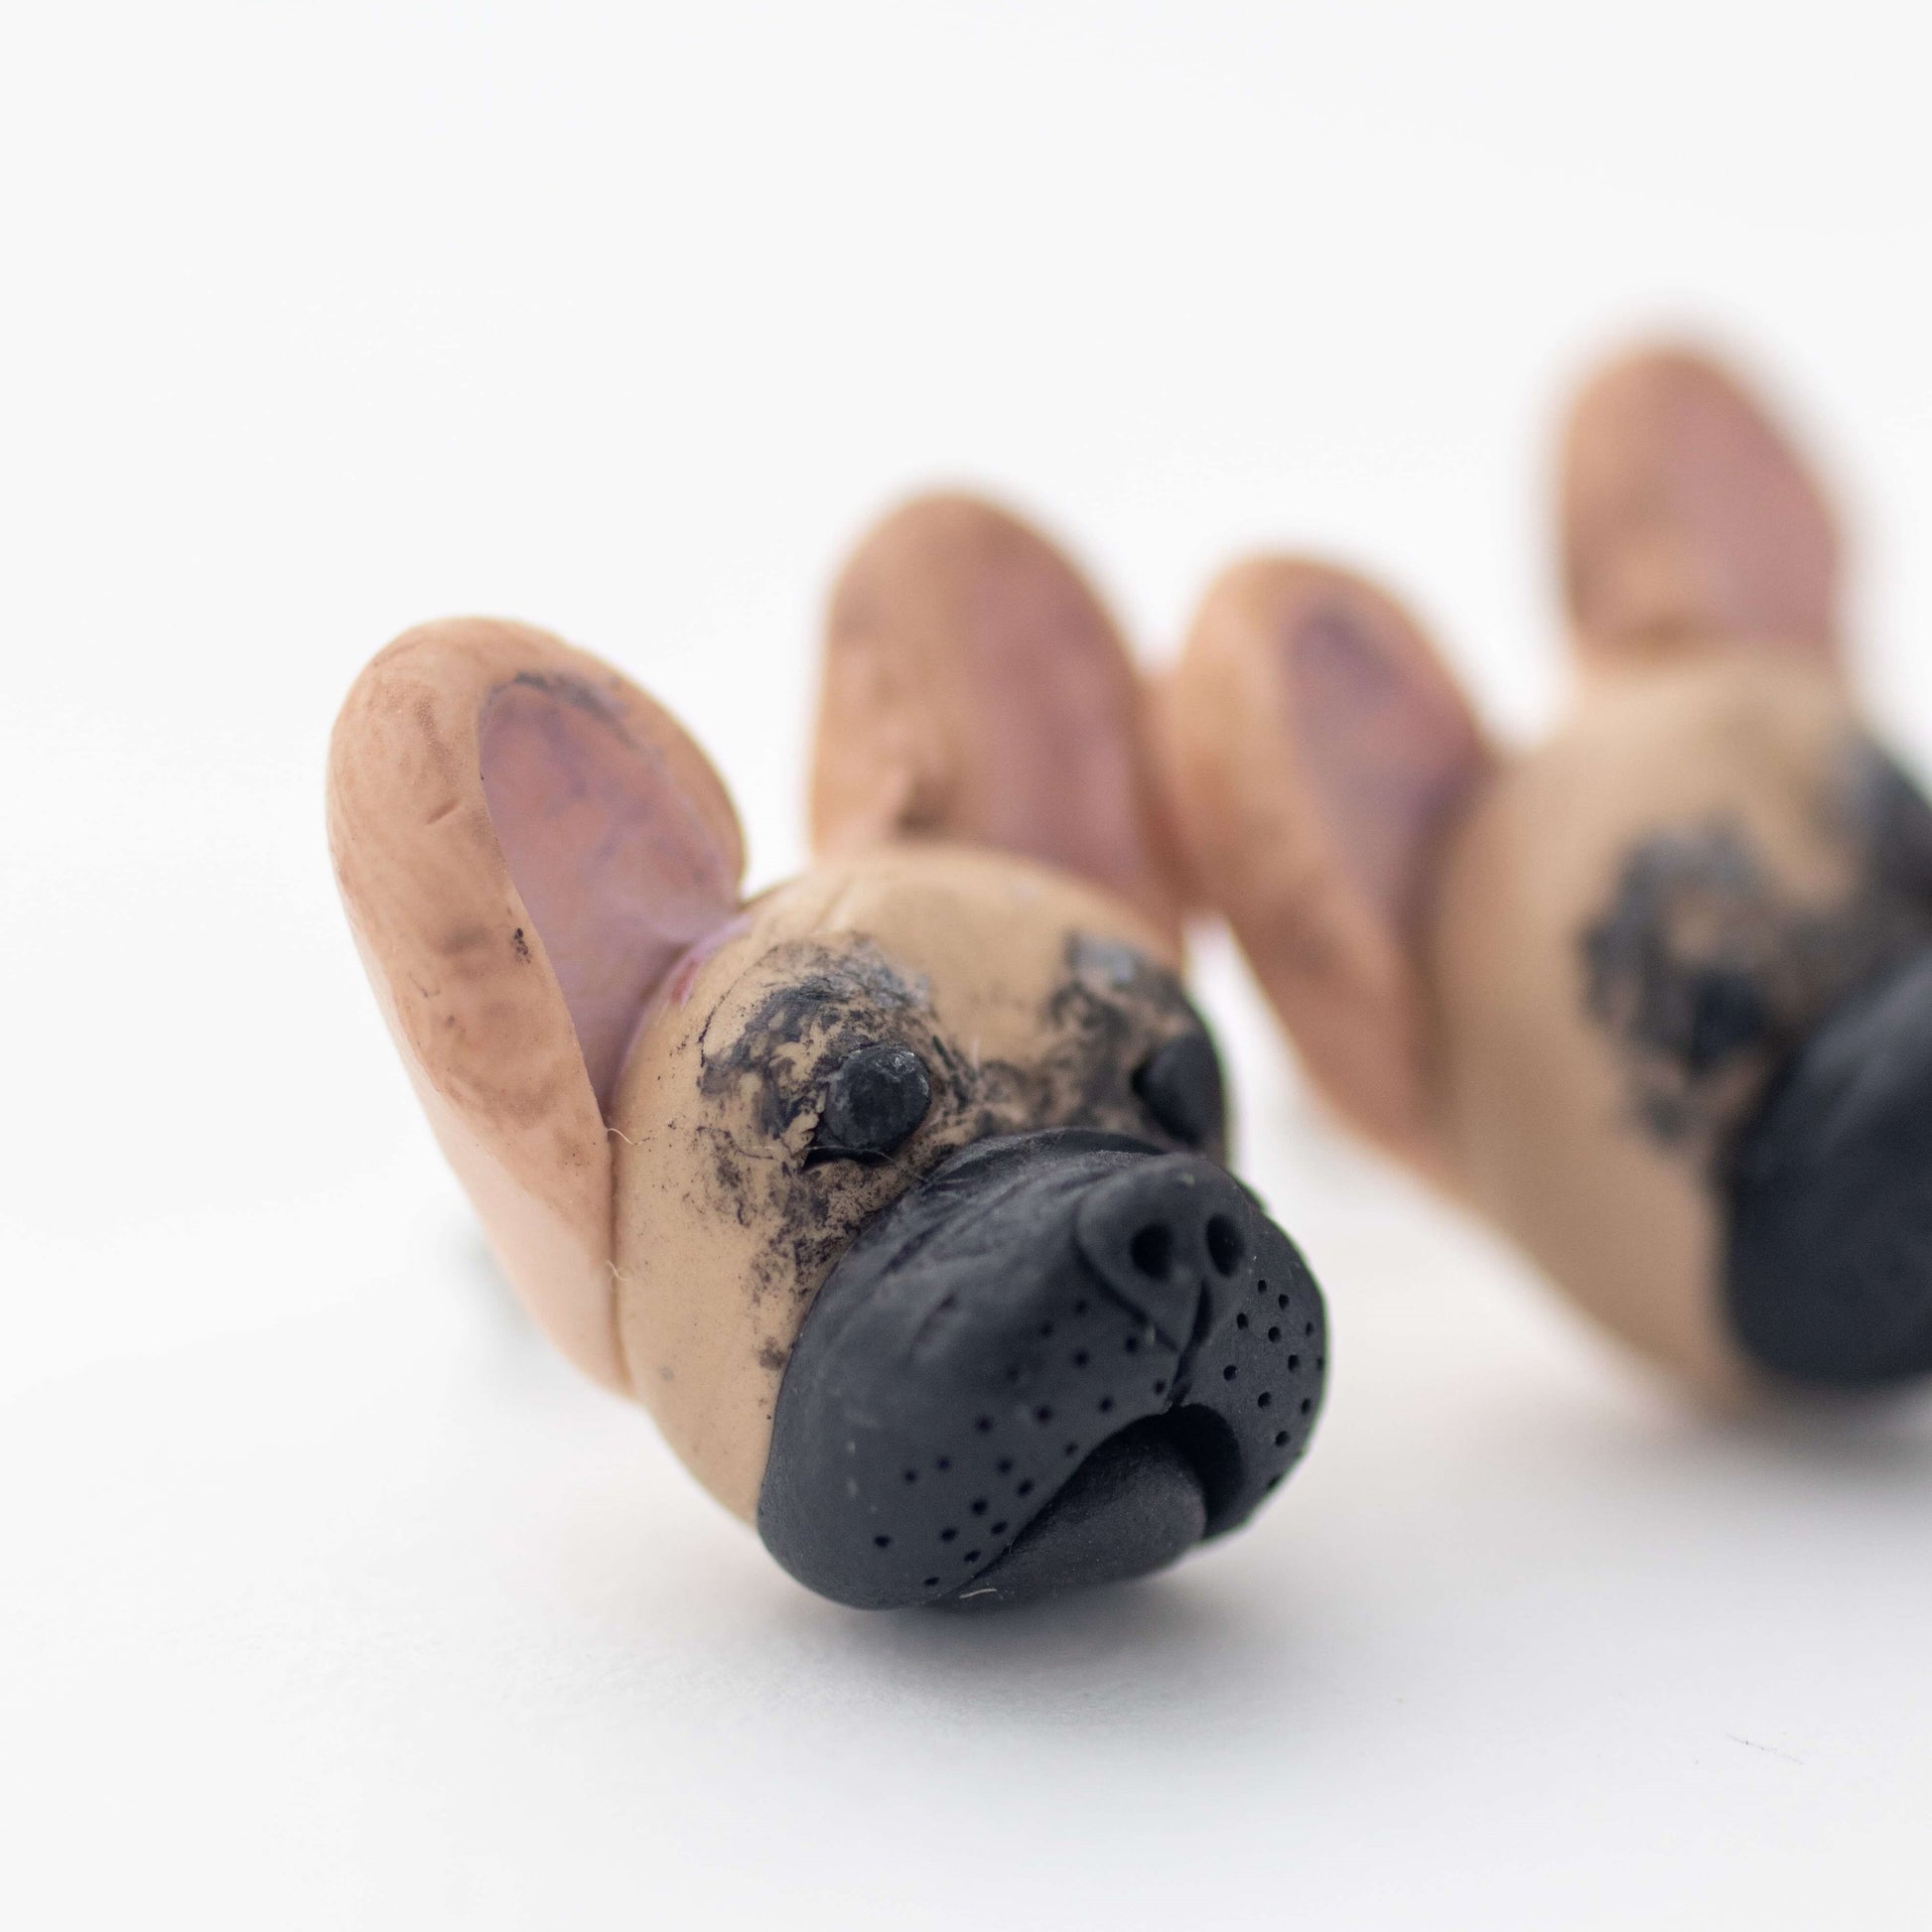 Handmade polymer clay french bulldog stud earrings shown up close